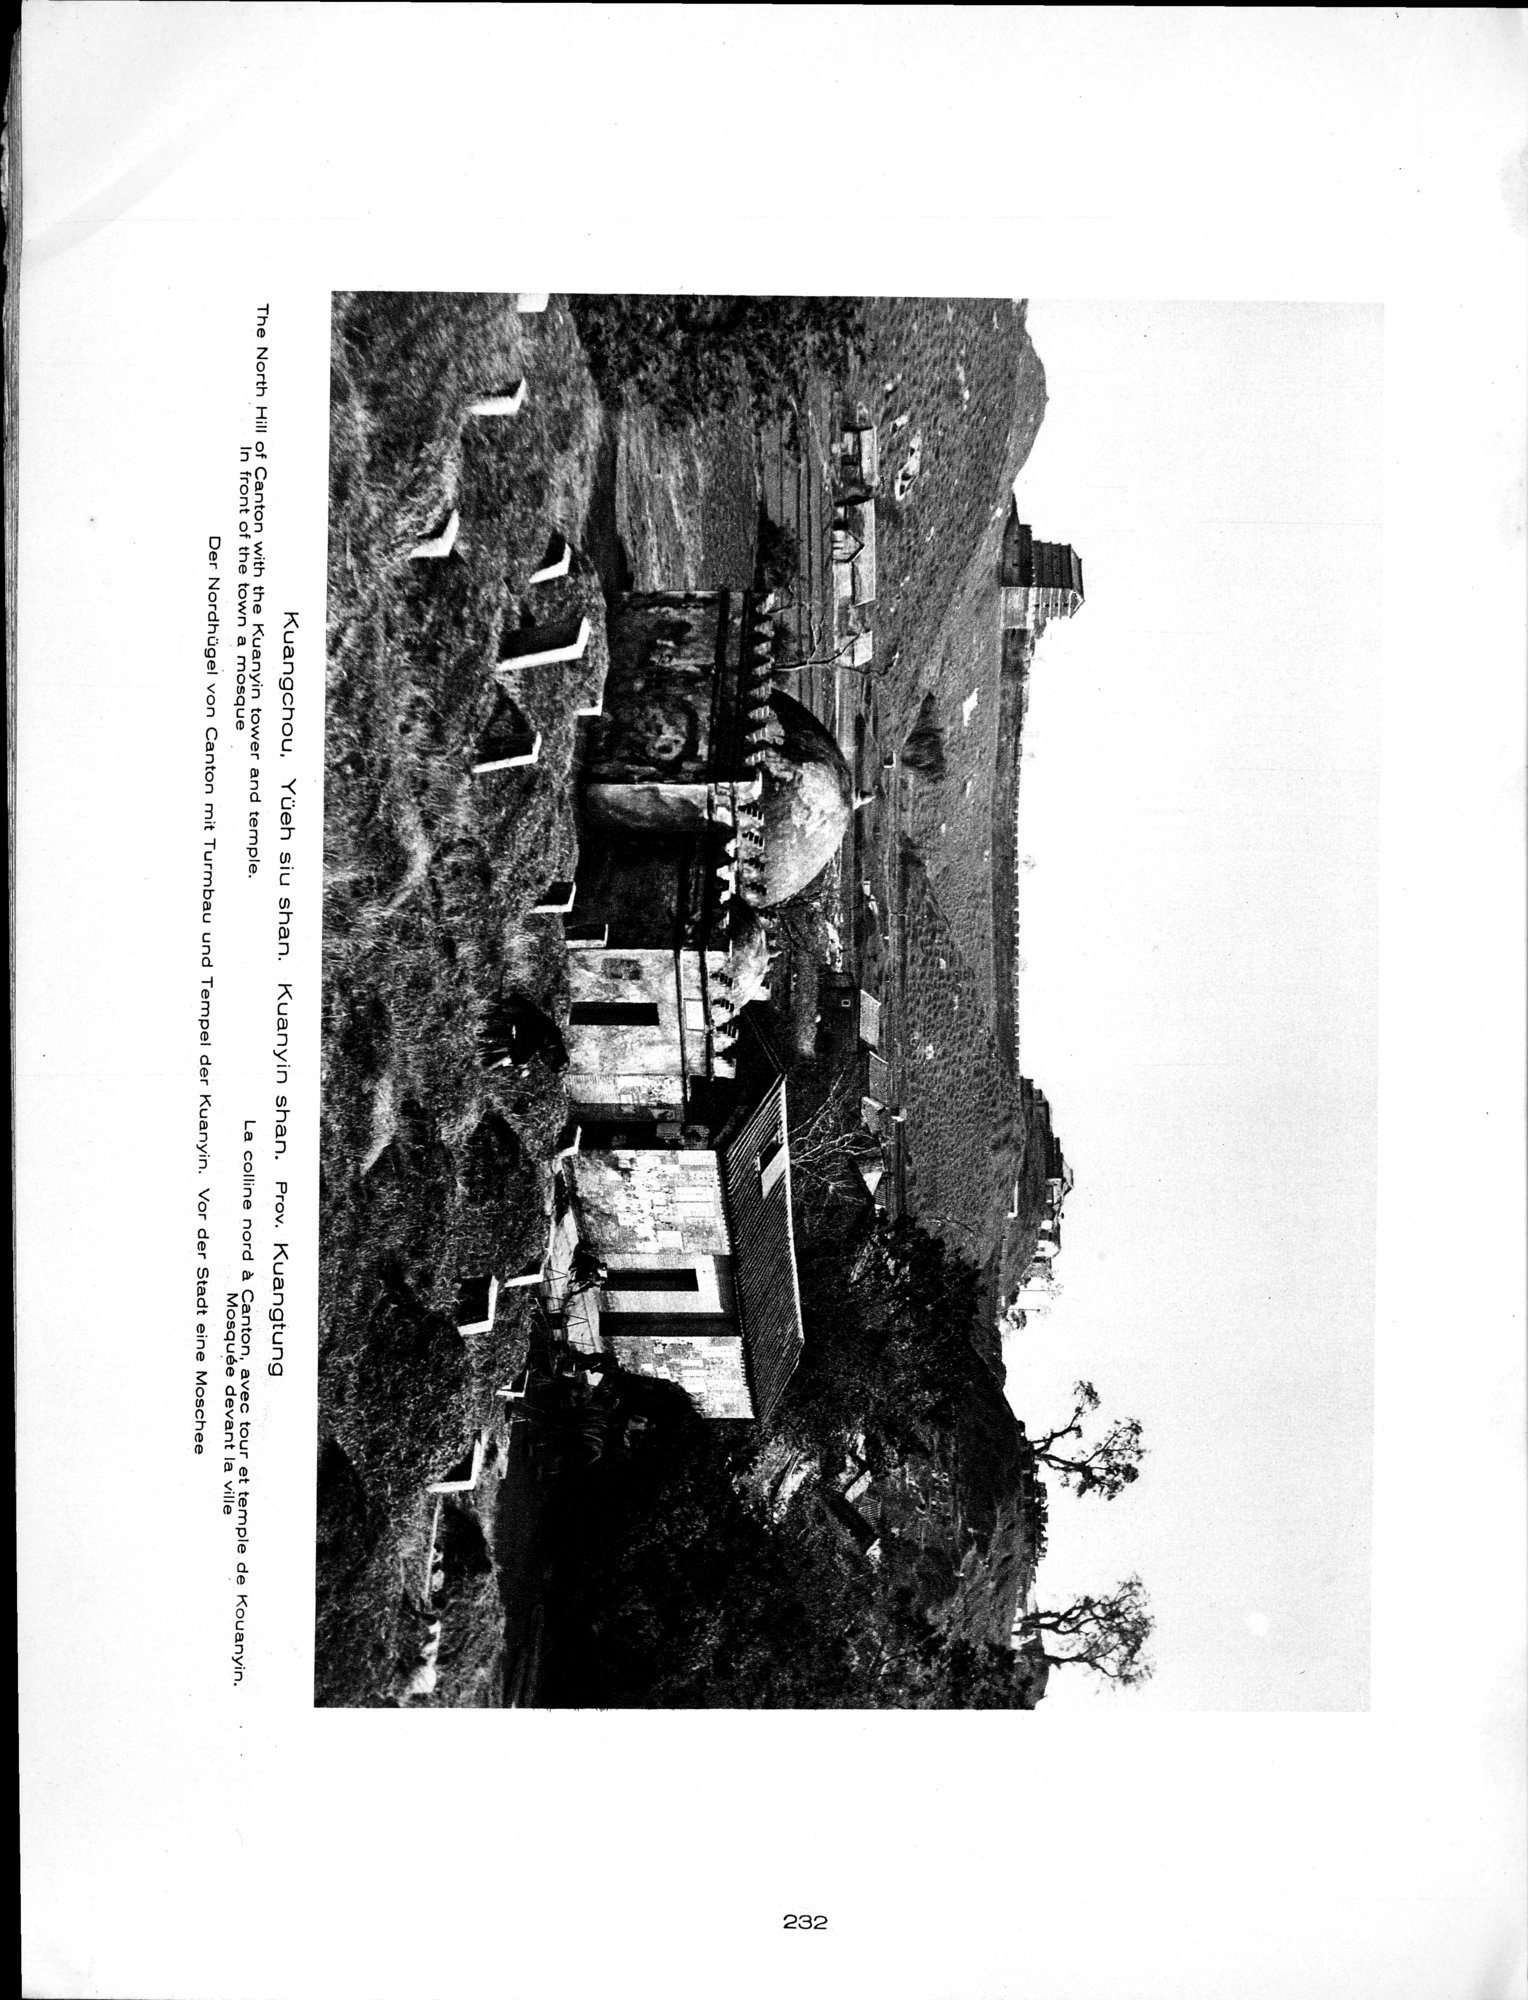 Baukunst Und Landschaft In China Vol 1 Page 262 Grayscale High Resolution Image